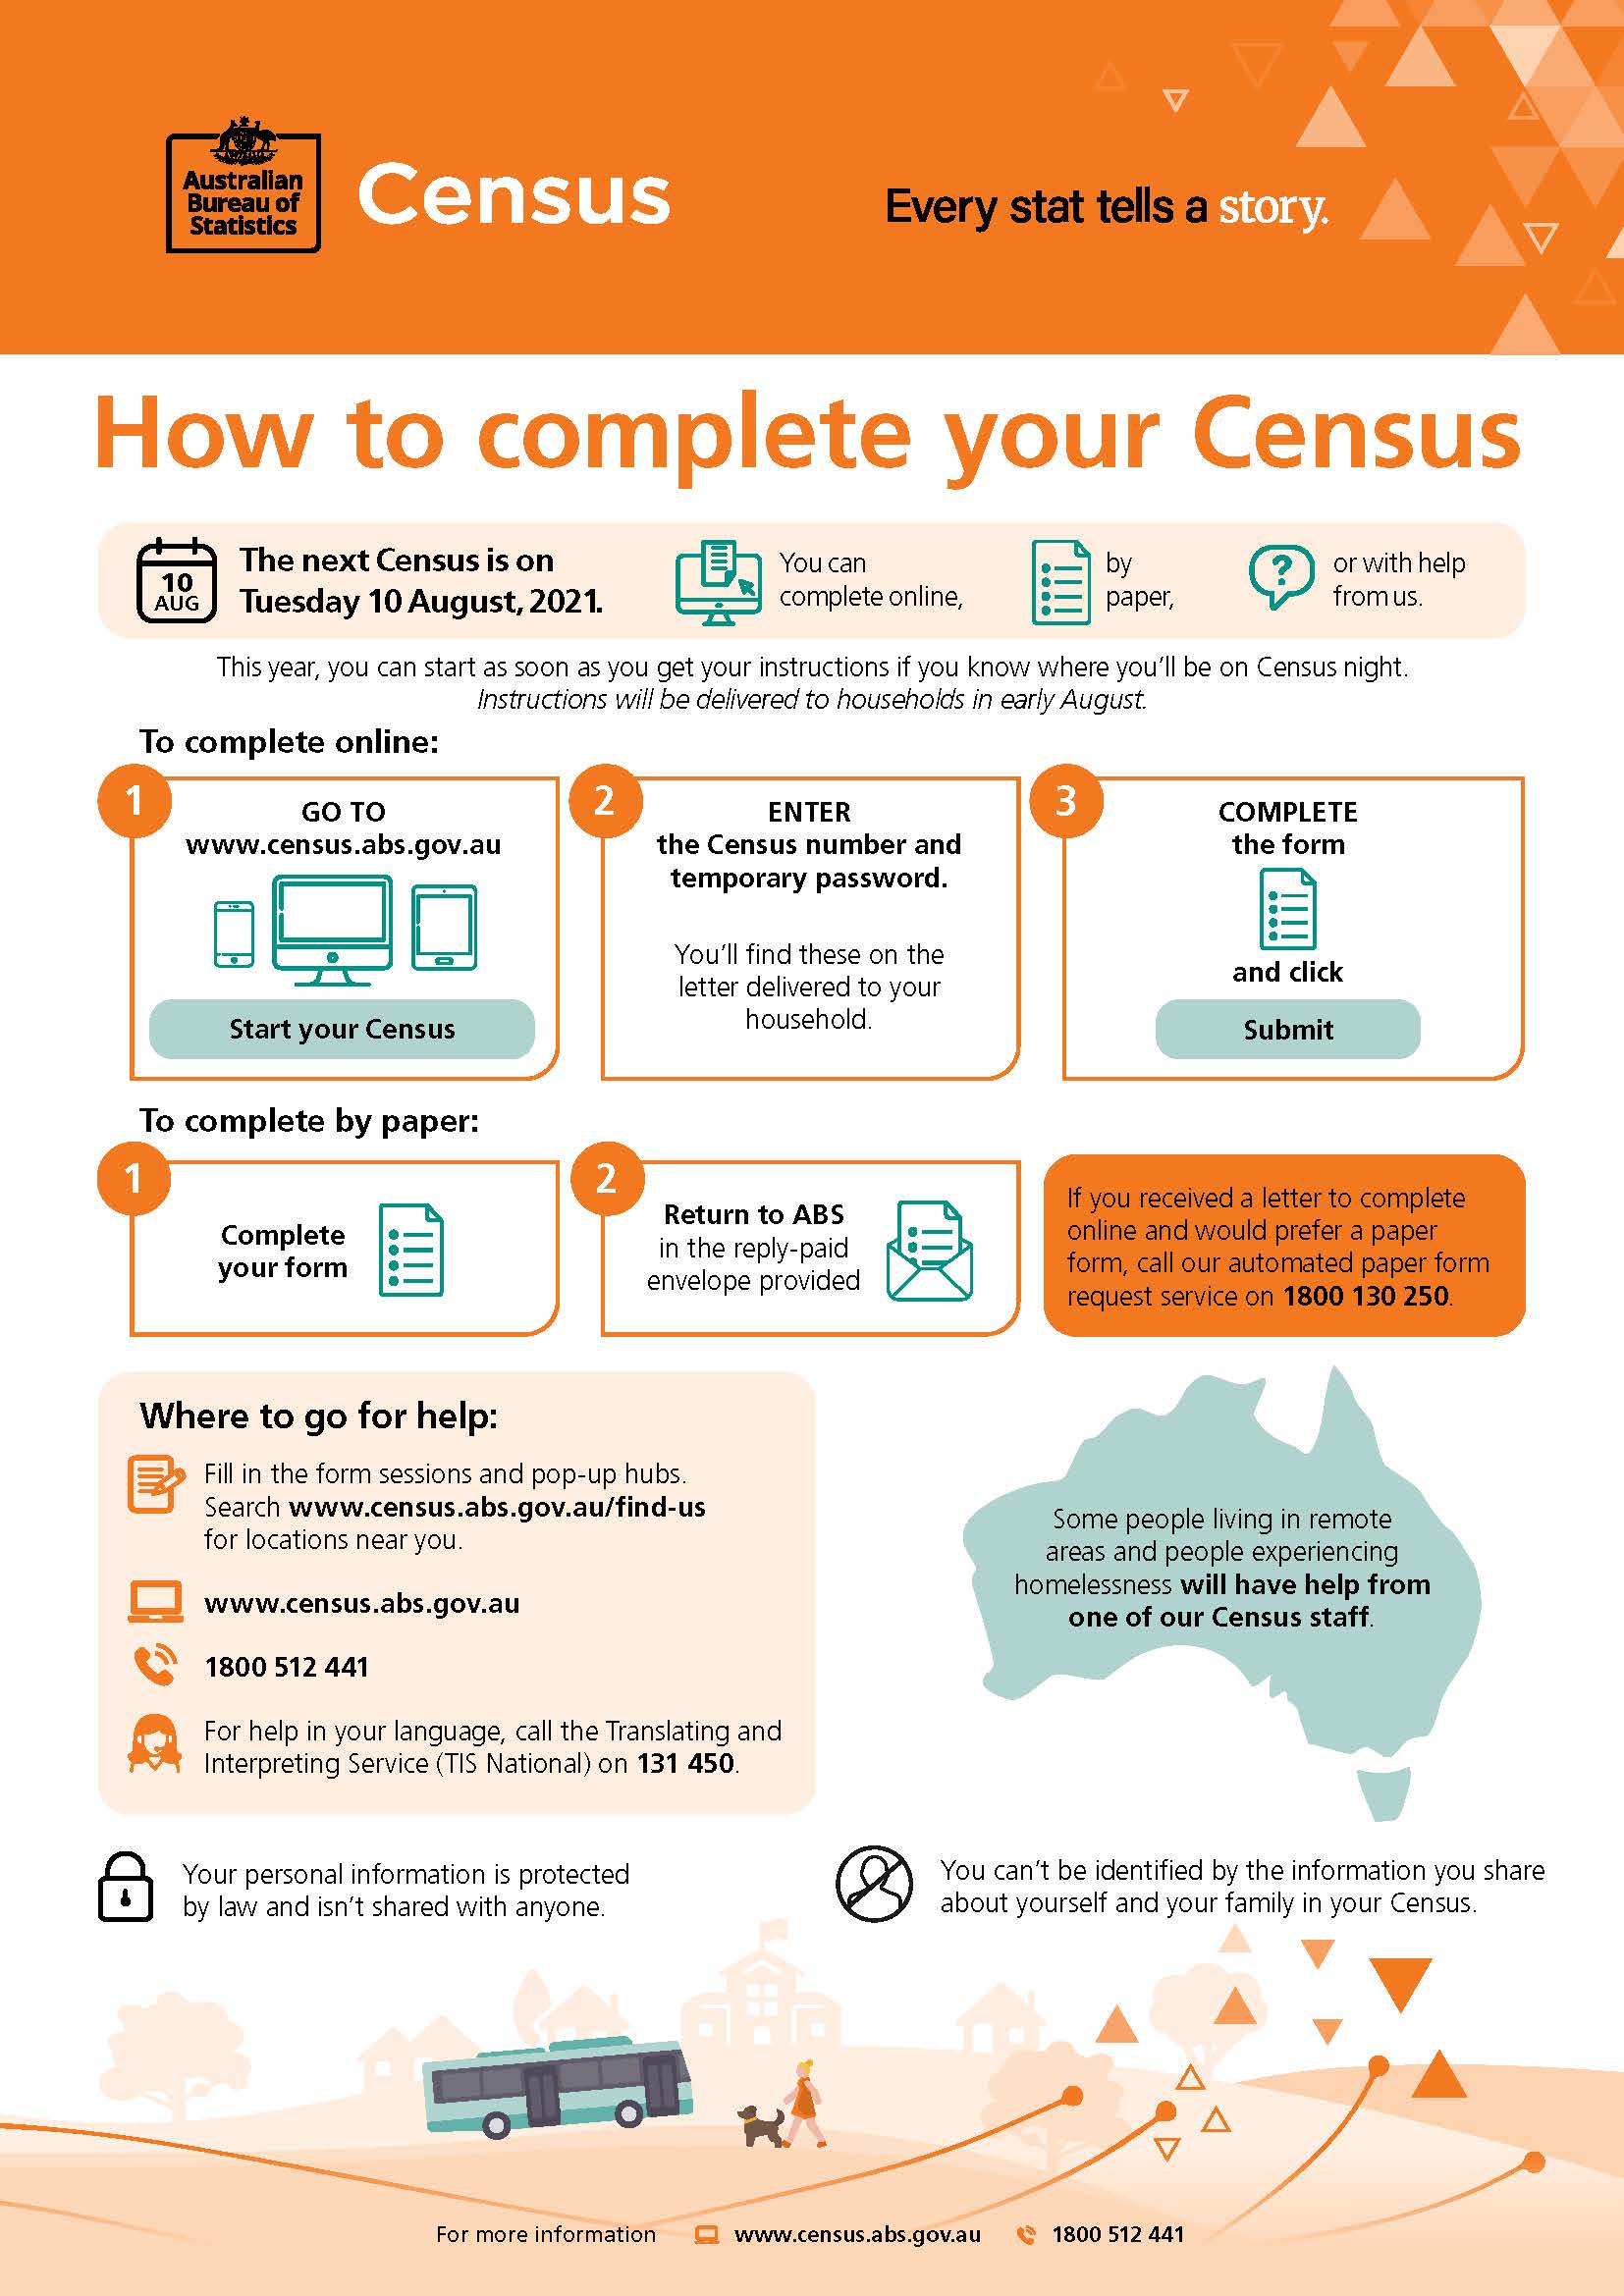 Census-ready